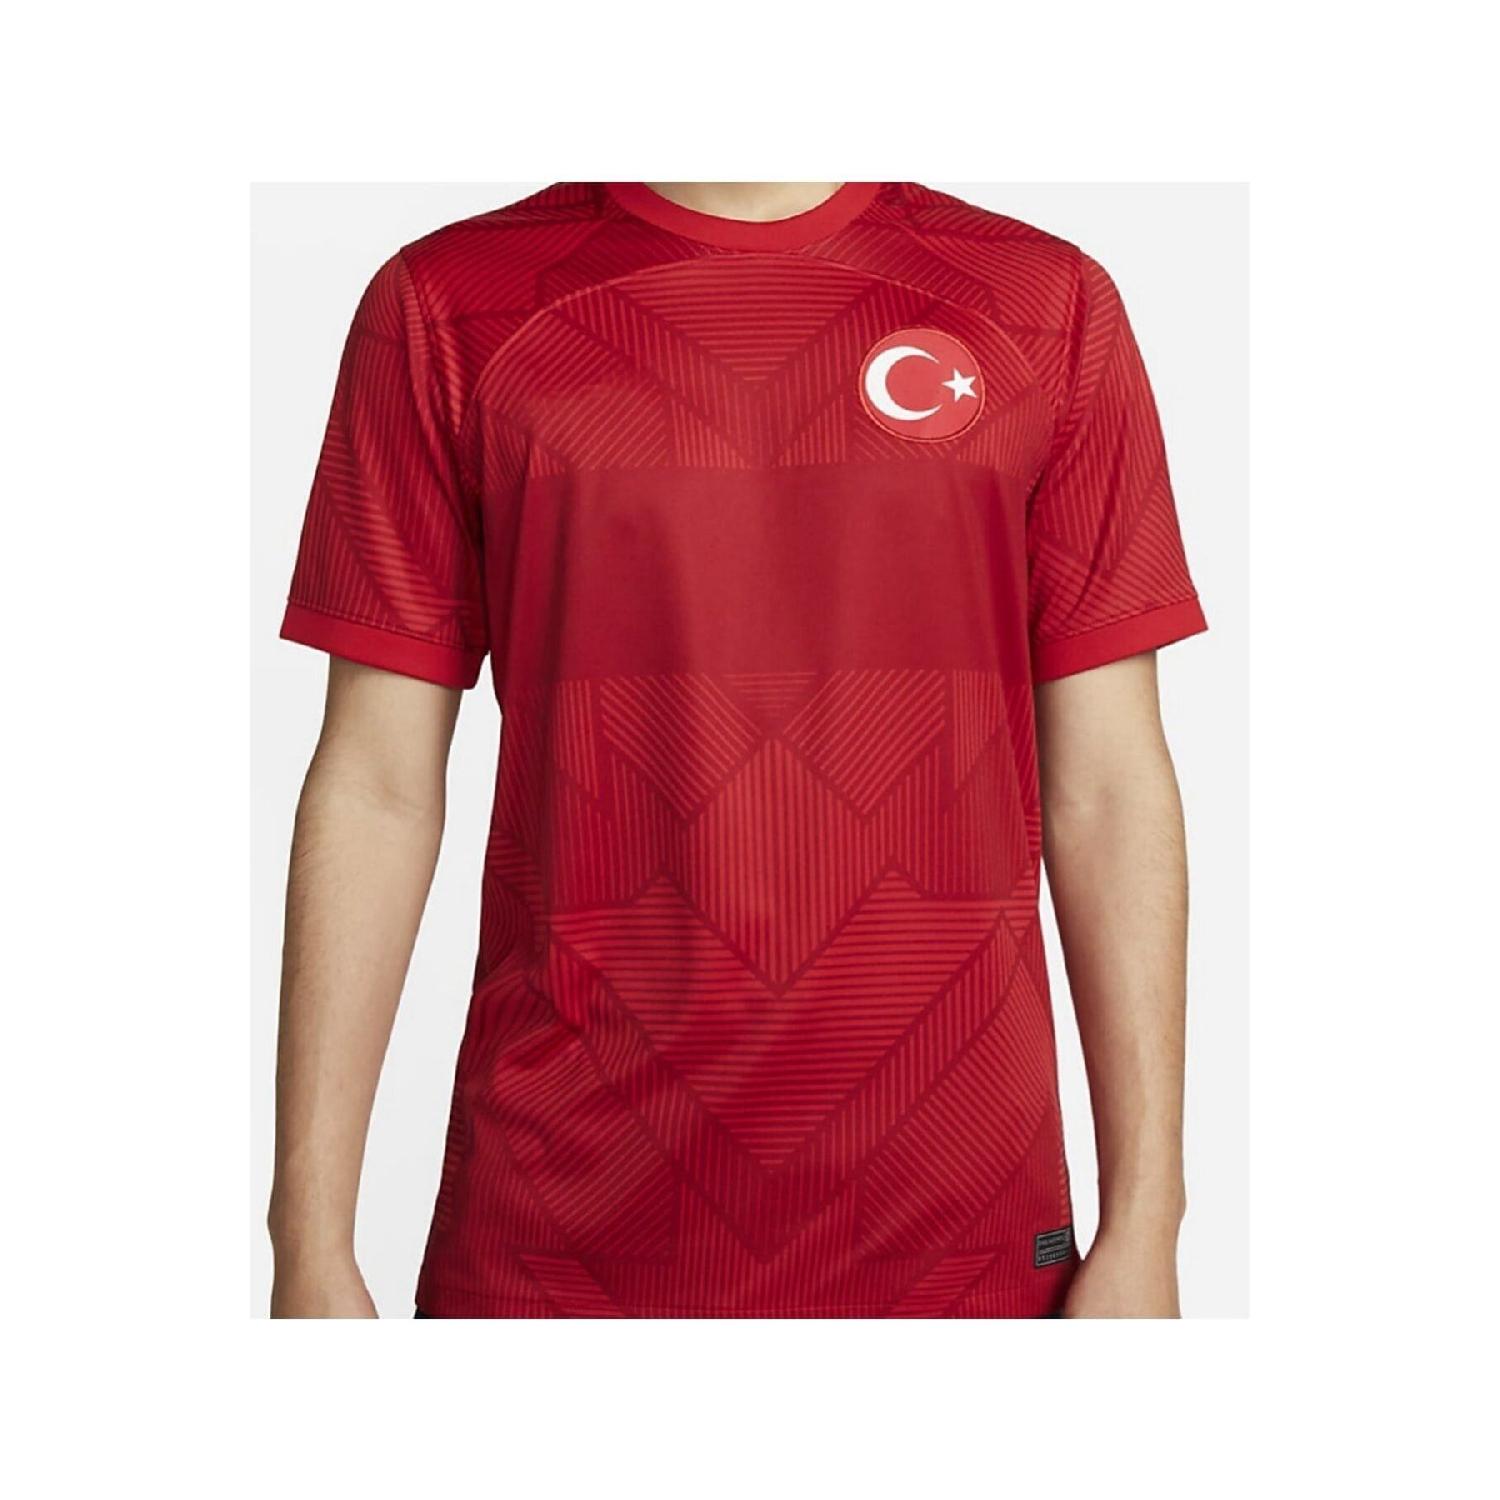 Santra Sports Wear Turkey National Team Jersey